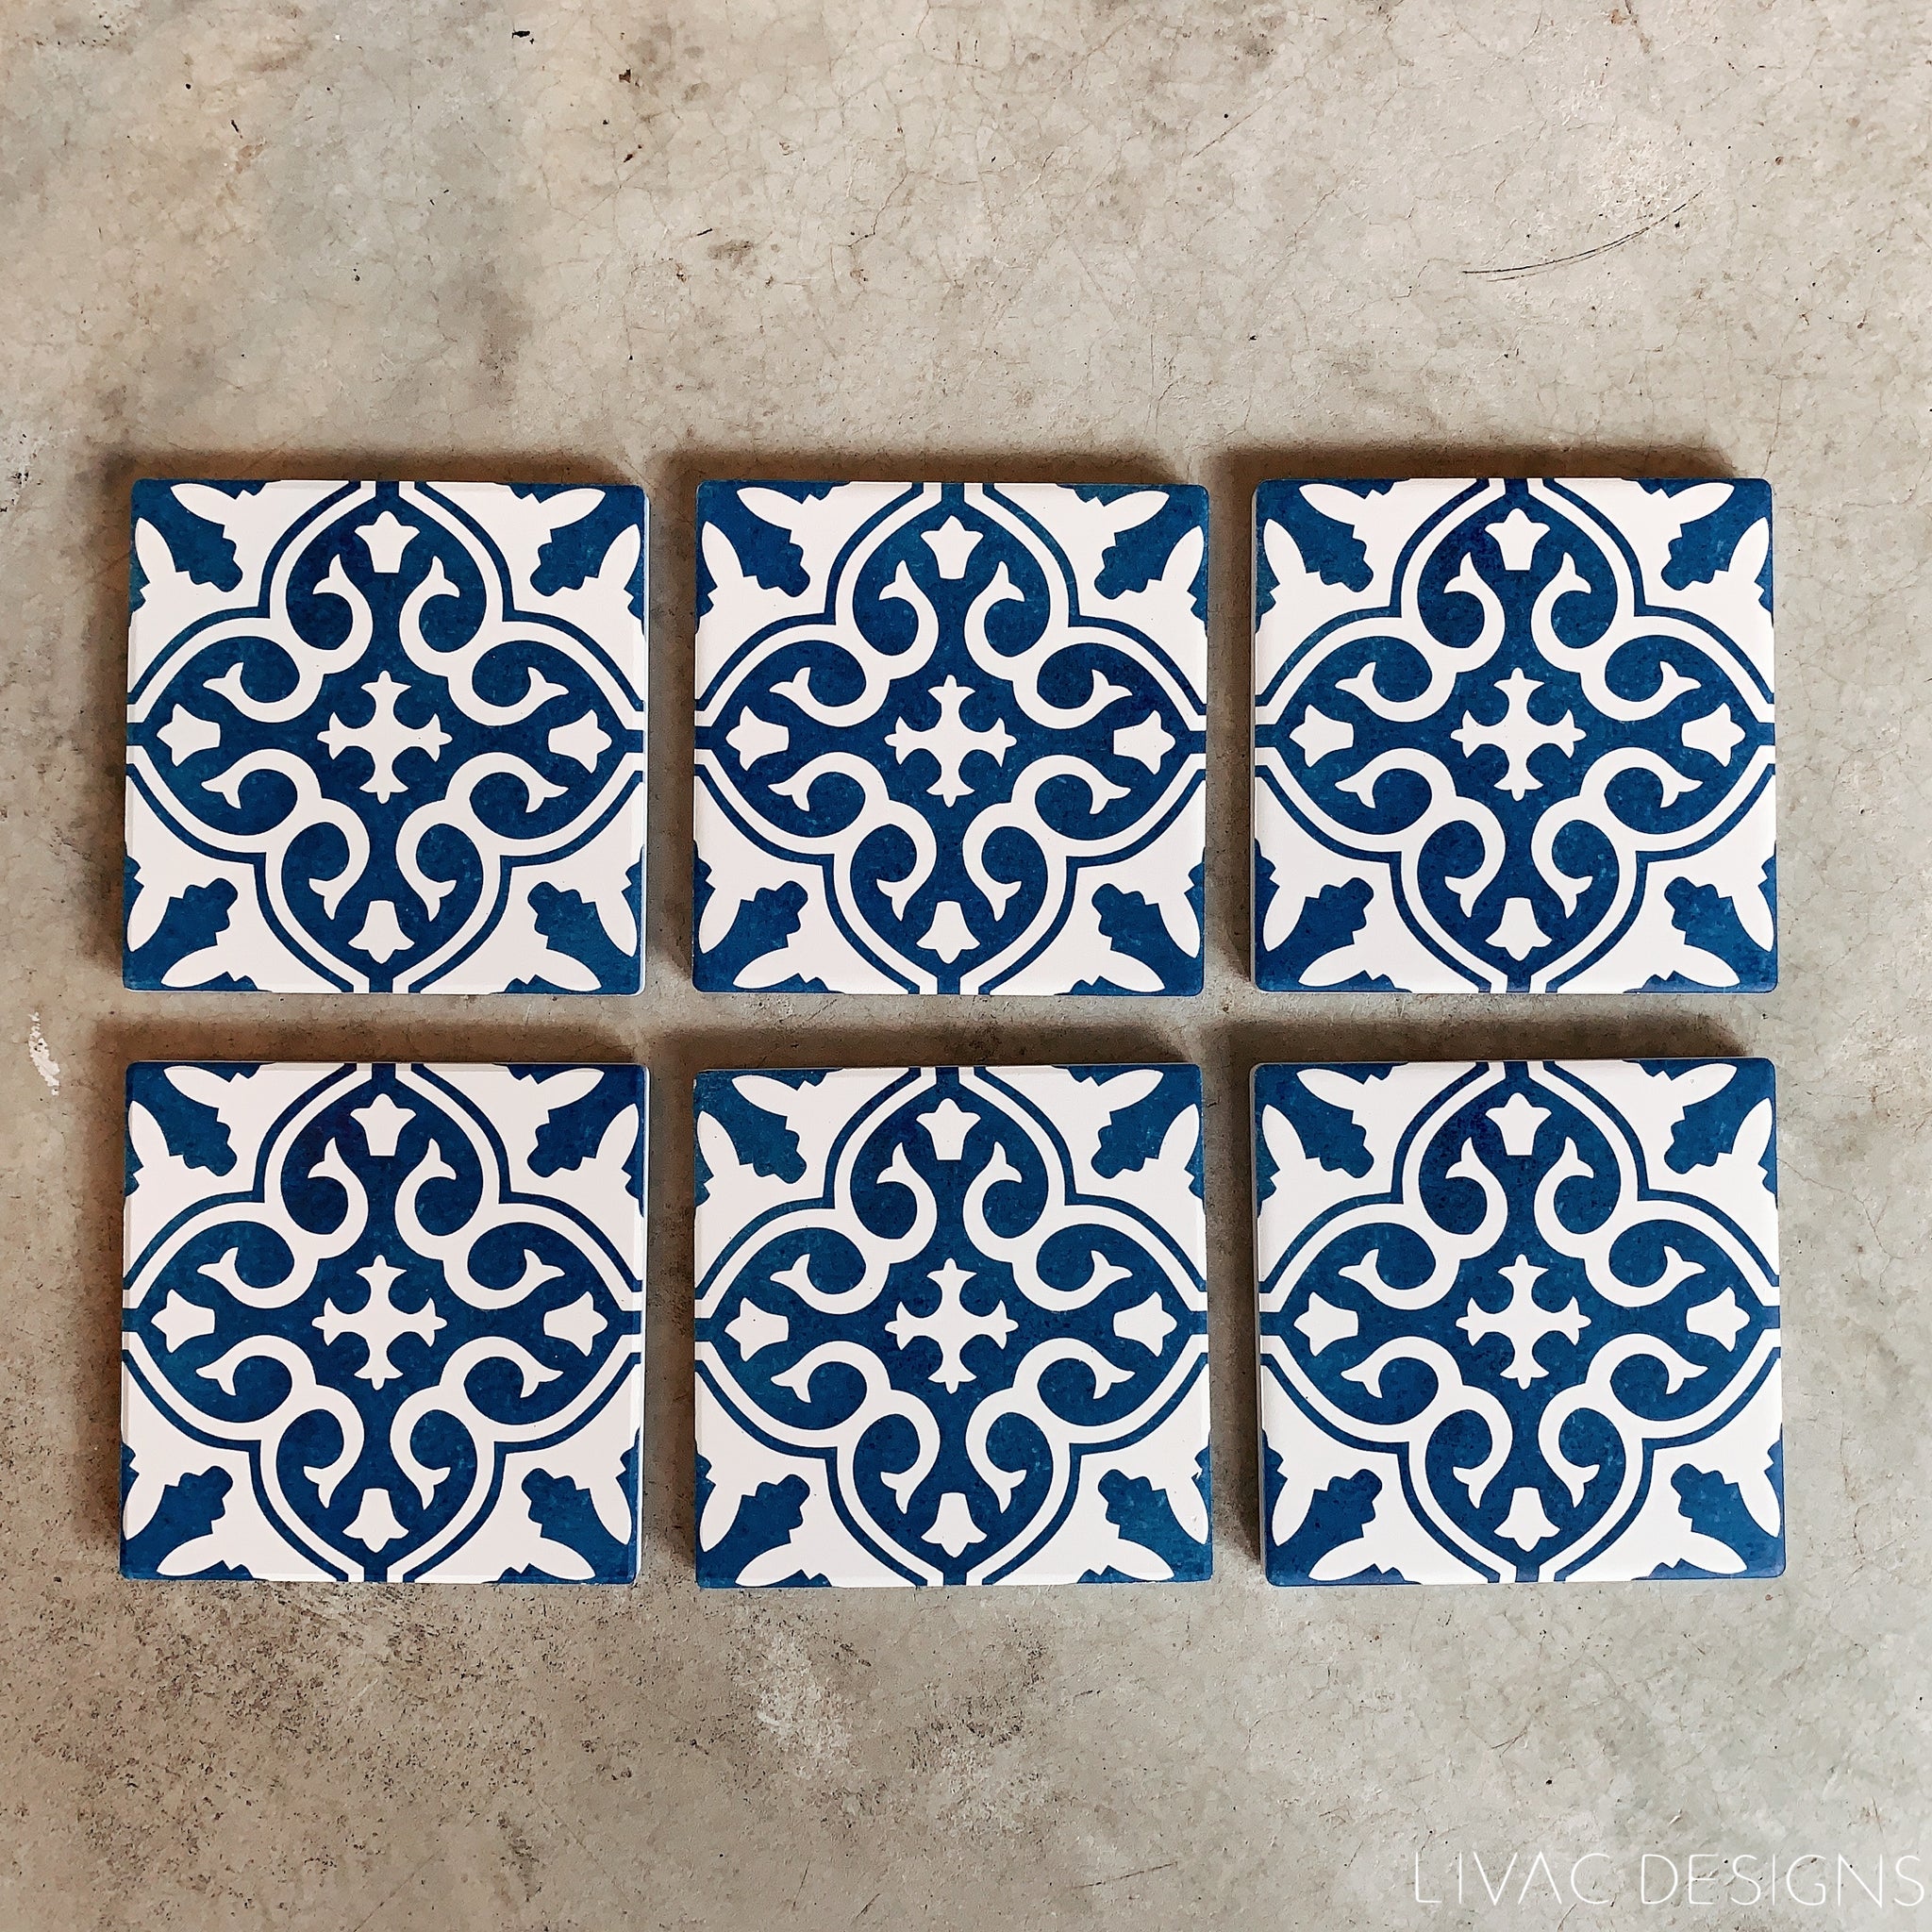 Set of 6 cork-backed coasters - Blue Tiles